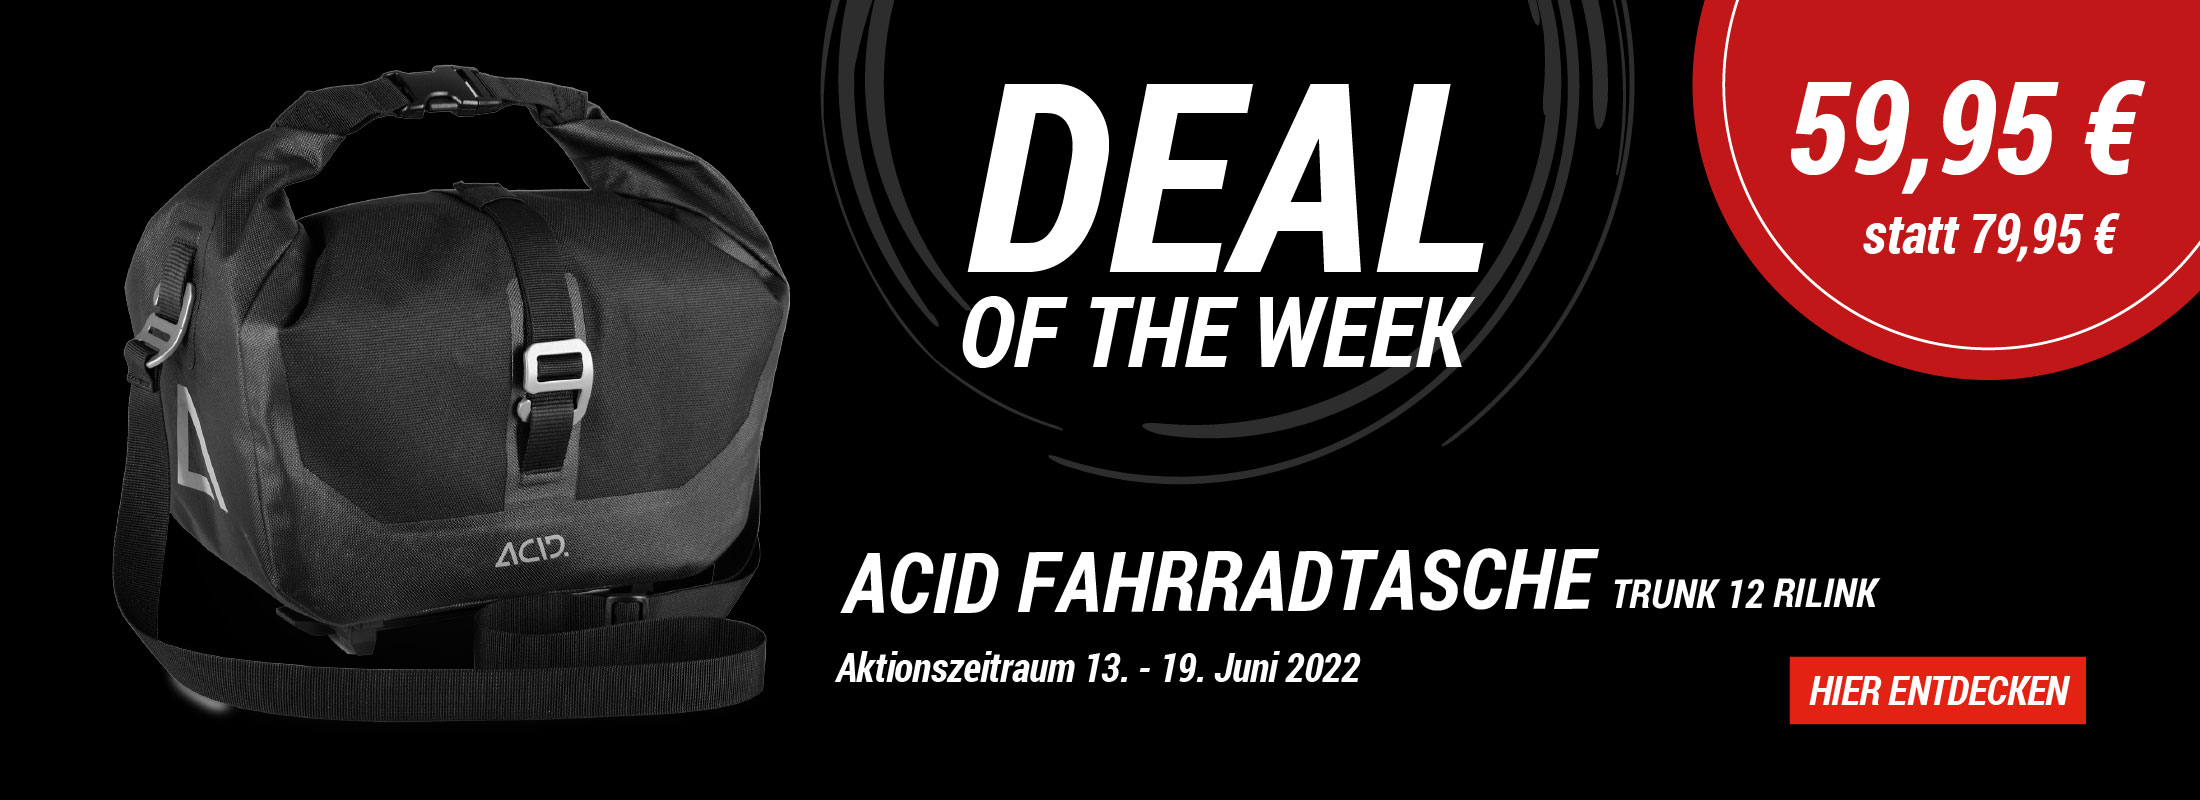 Deal of the Week Acid Fahrradtasche Trunk 12 Relink im CUBE Store Rostock